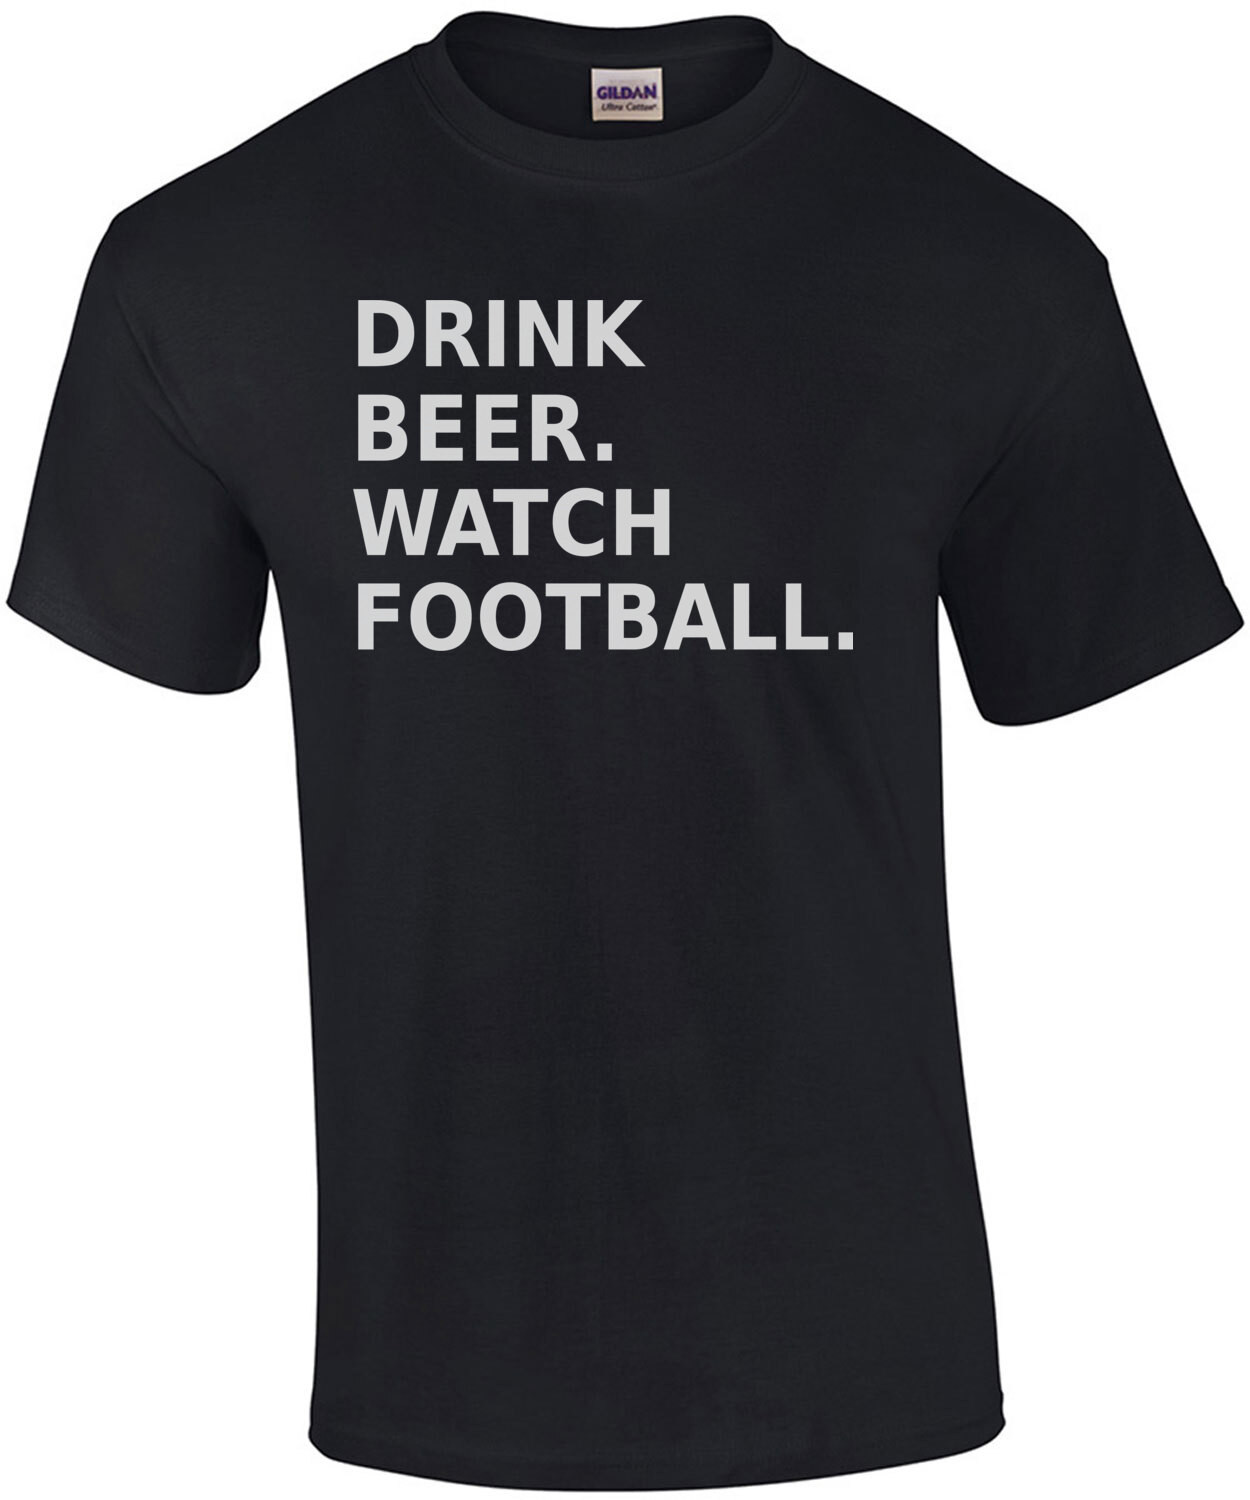 Drink Beer. Watch Football. Funny Football T-Shirt